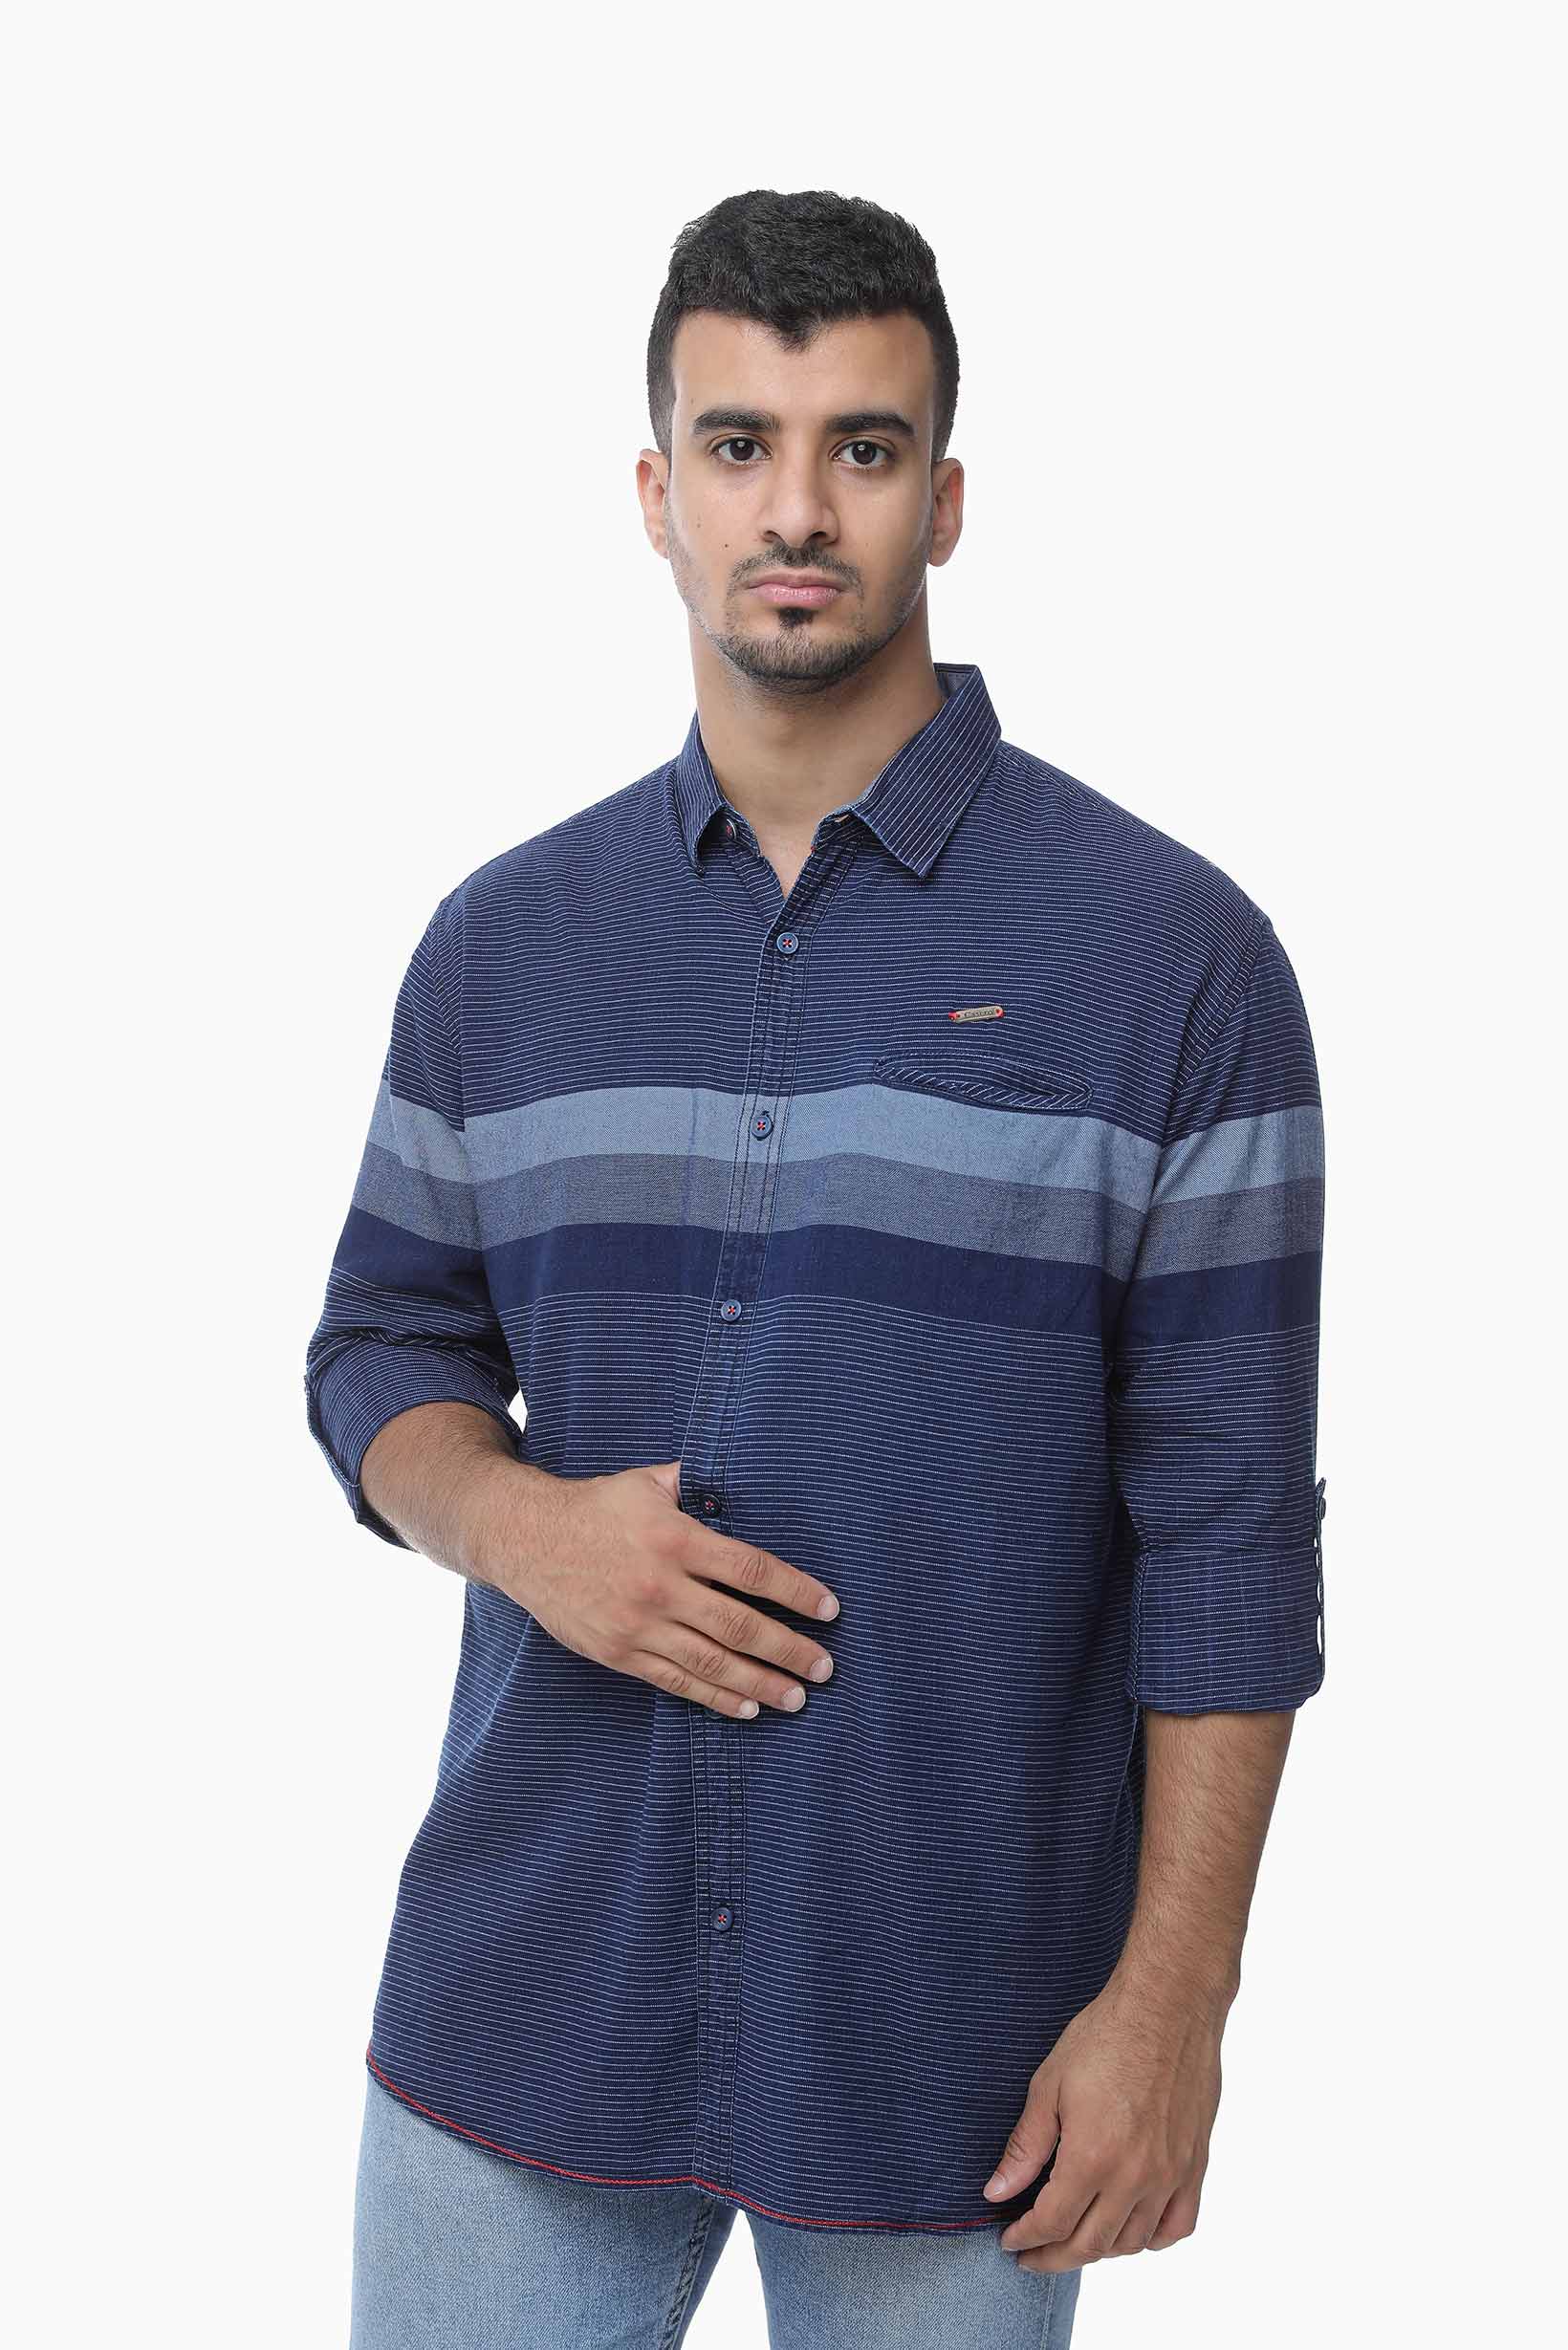 Pocket Gradient mens sleeve sleeve shirts BLUE